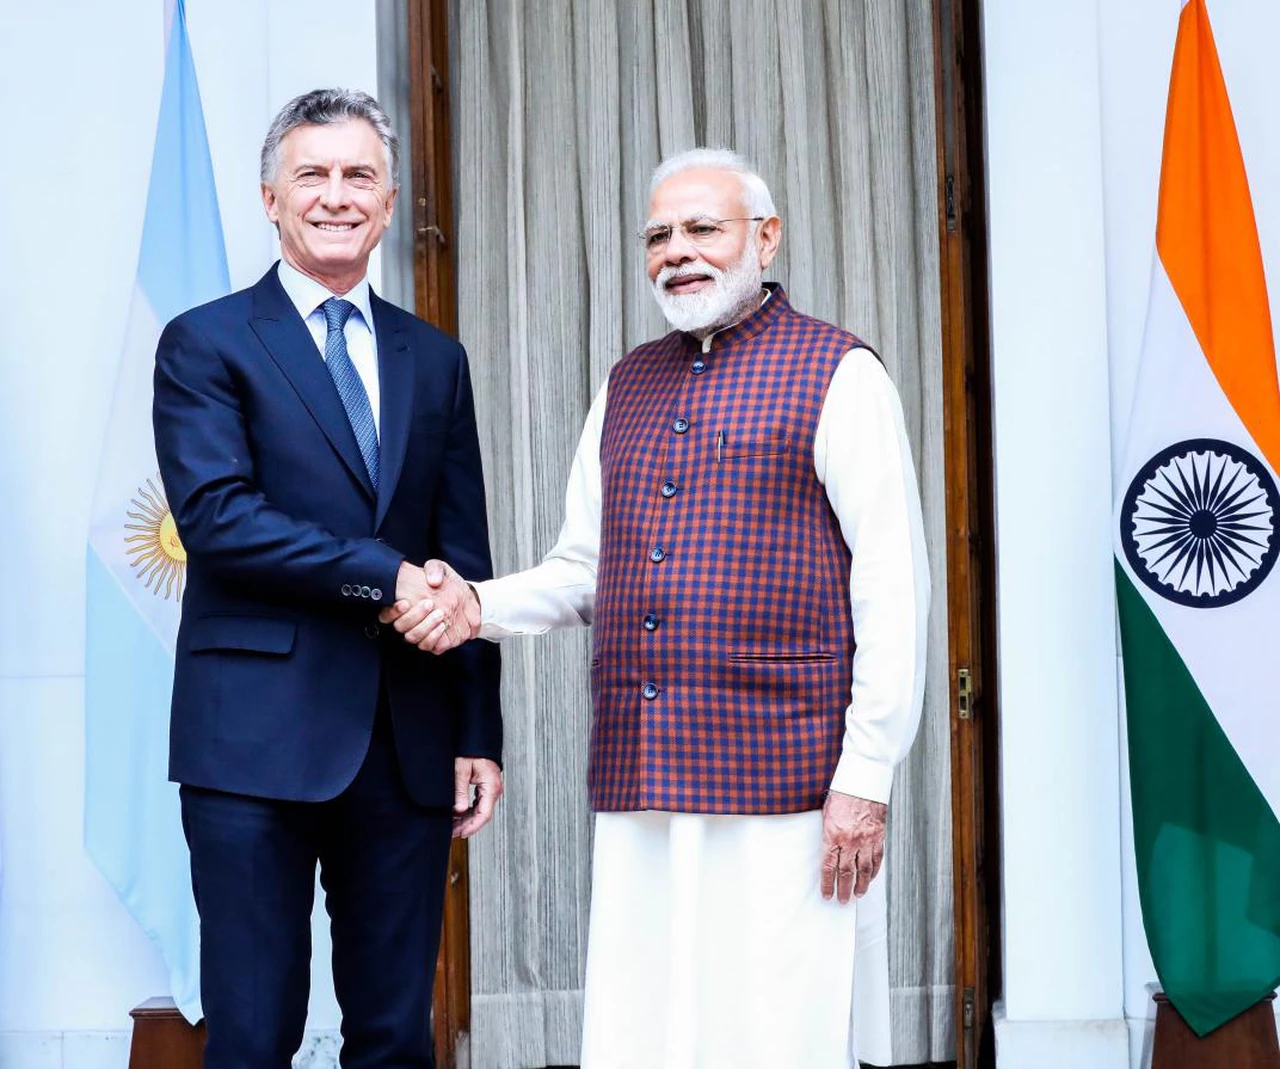 Macri en India: se reunió con el primer ministro Narendra Modi con una agenda de inversiones